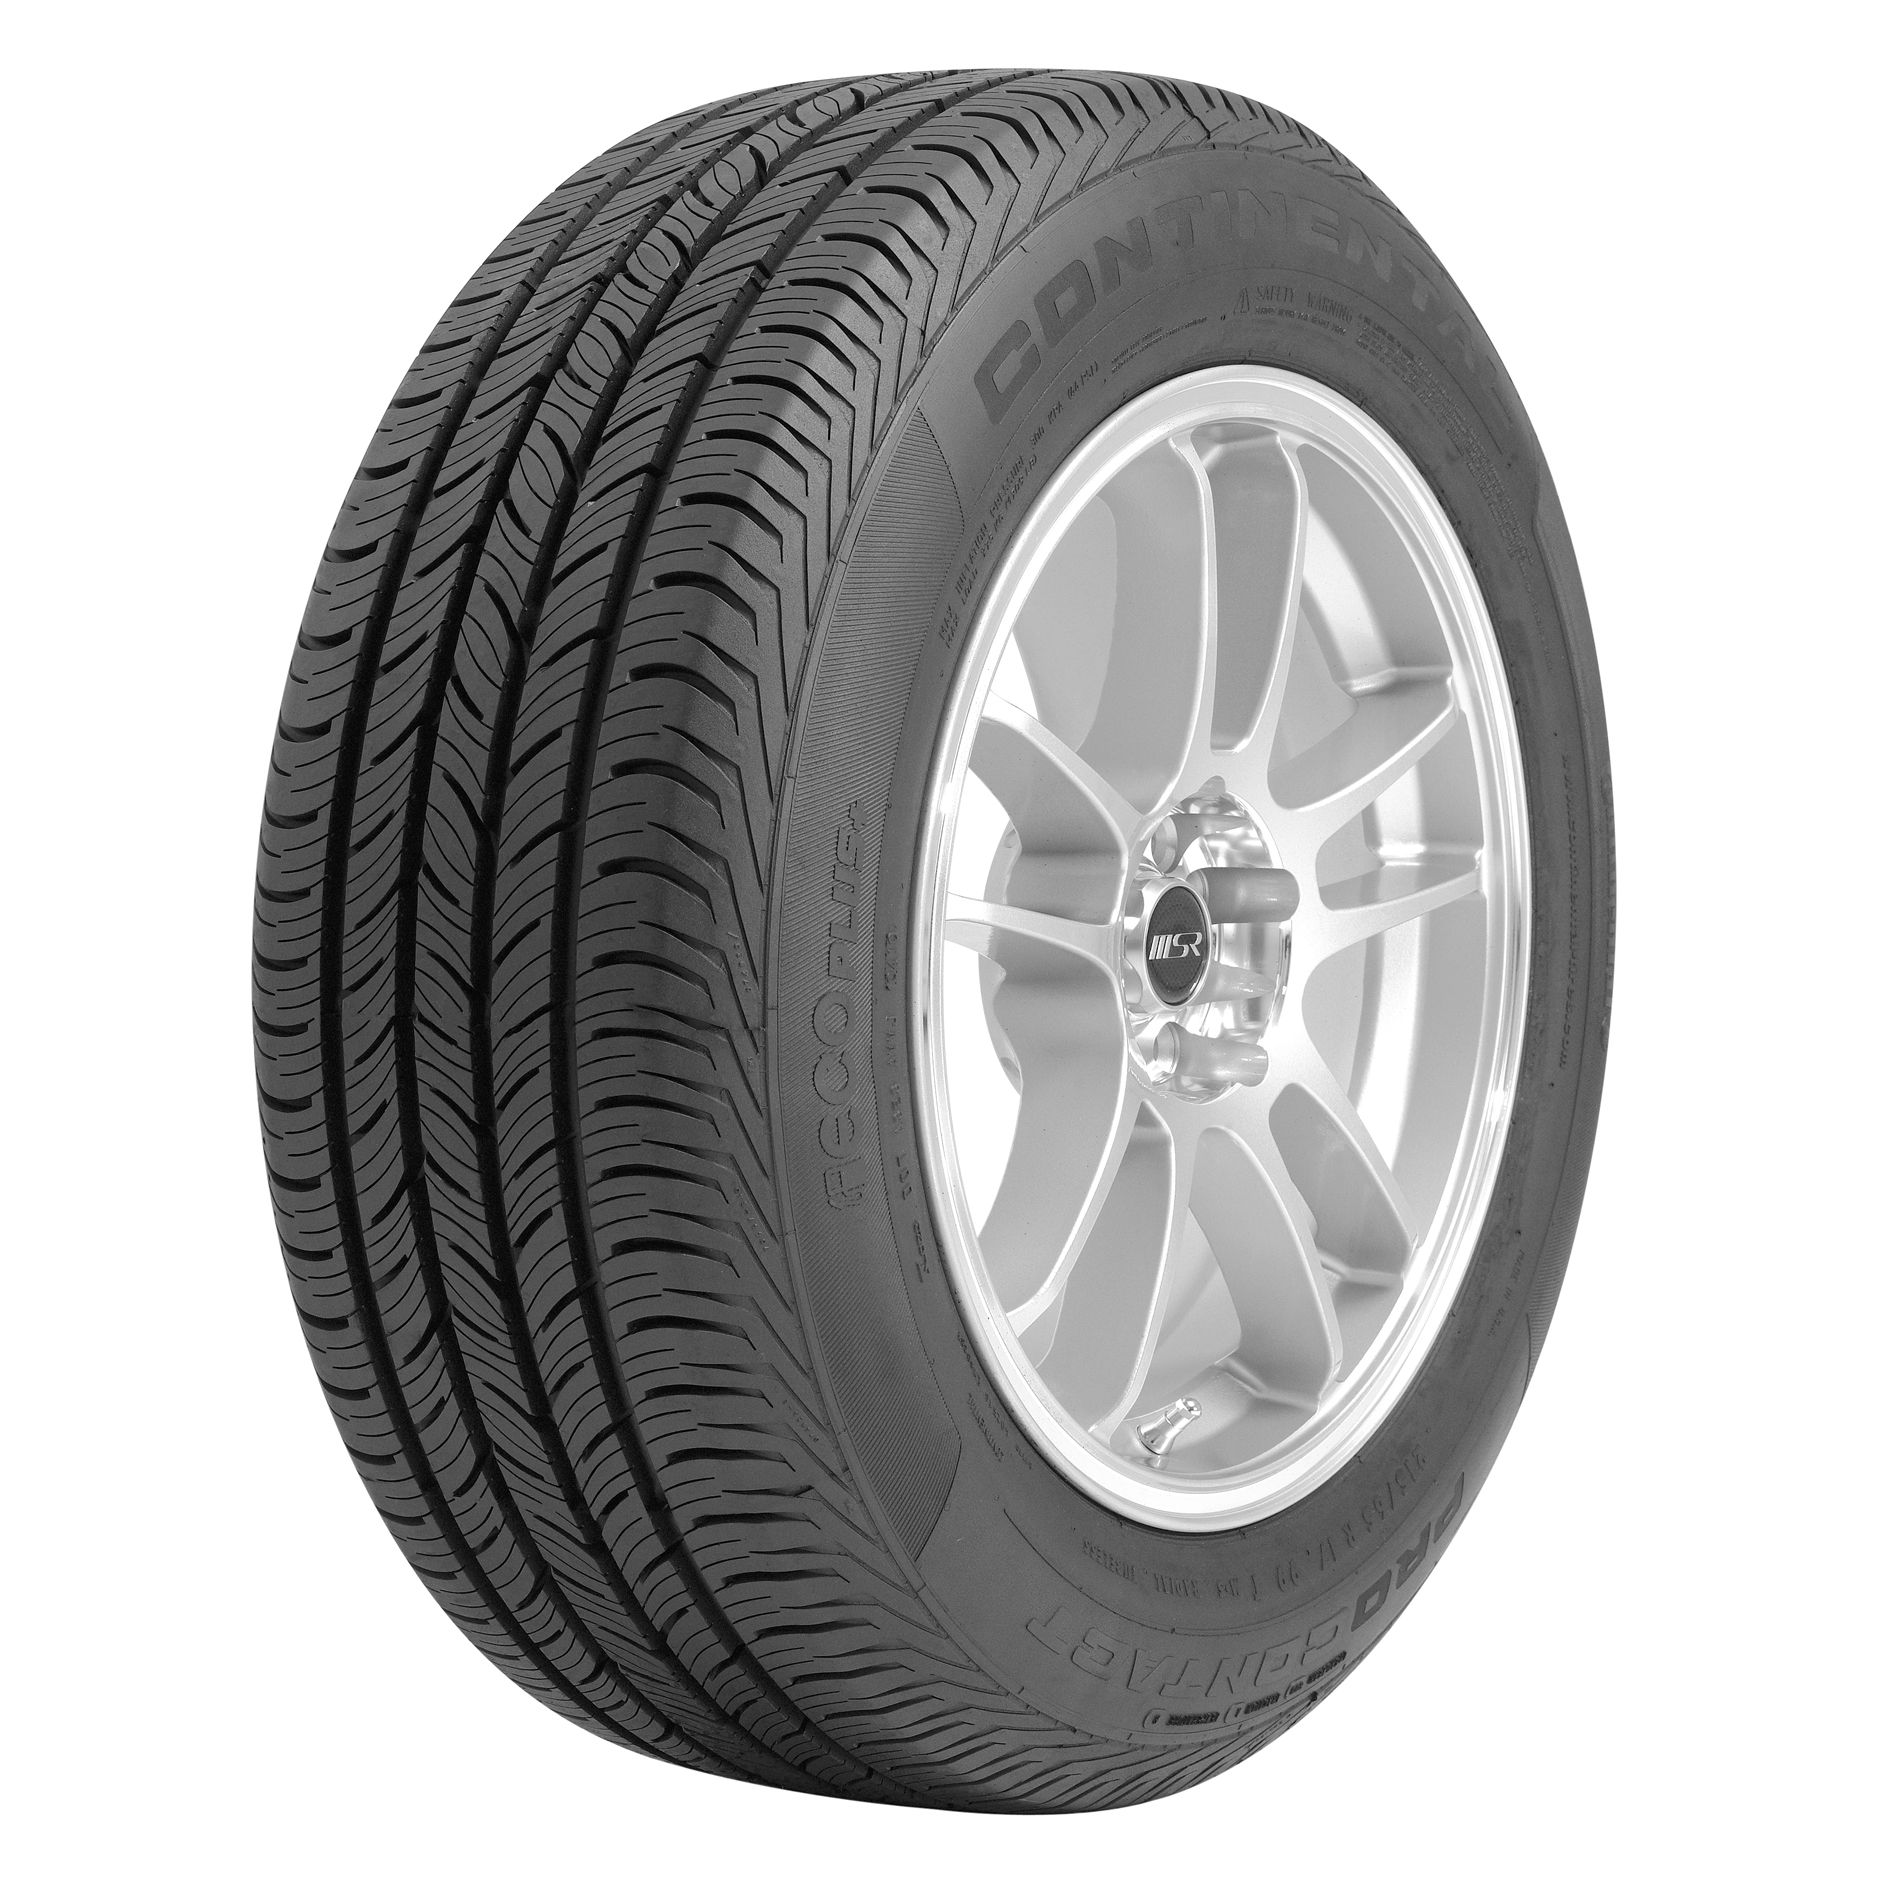 Continental Pro Contact Eco Plus - 185/65R15 88T BW - All-Season Tire